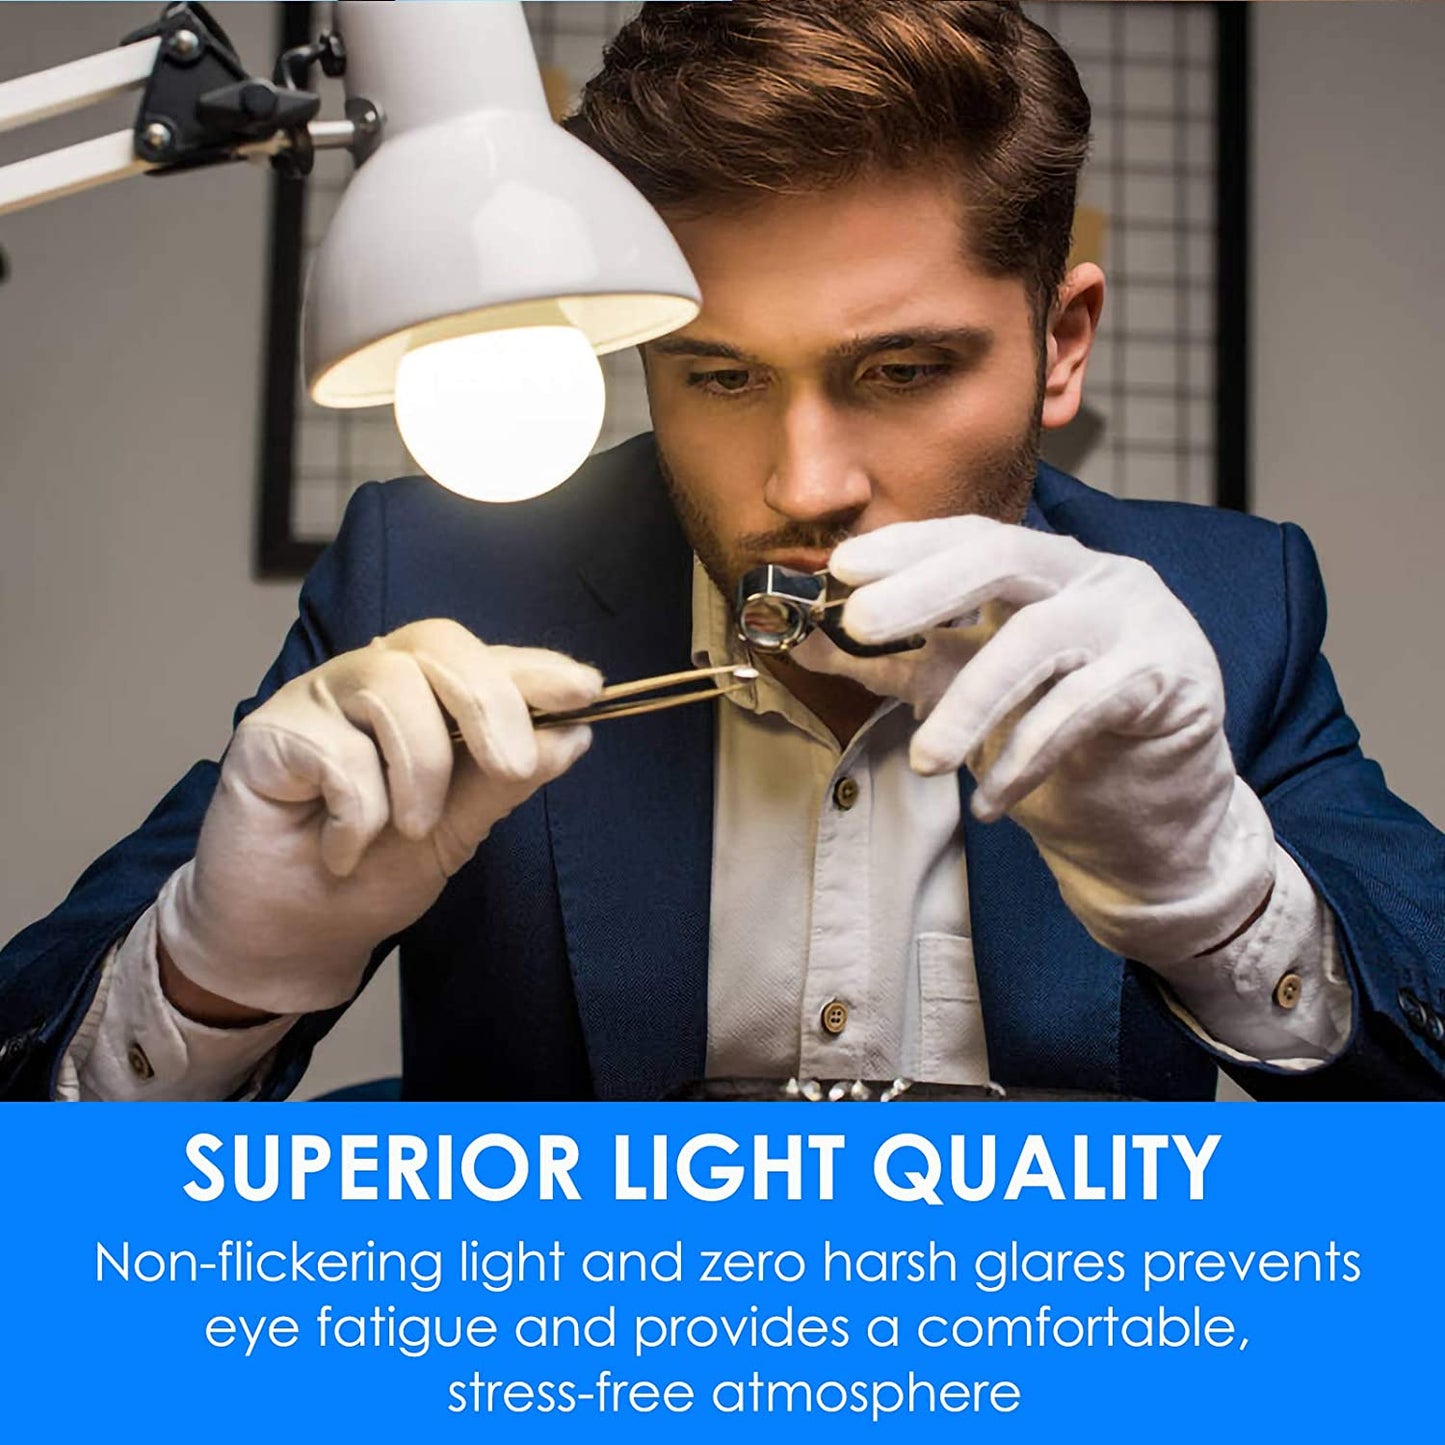 Energetic Light Bulbs 75 Watt, 1200LM Super Brightness, Daylight 5000K, E26 Standard Base, Non-Dimmable A19 LED Light Bulb, UL Listed, 4 Pack